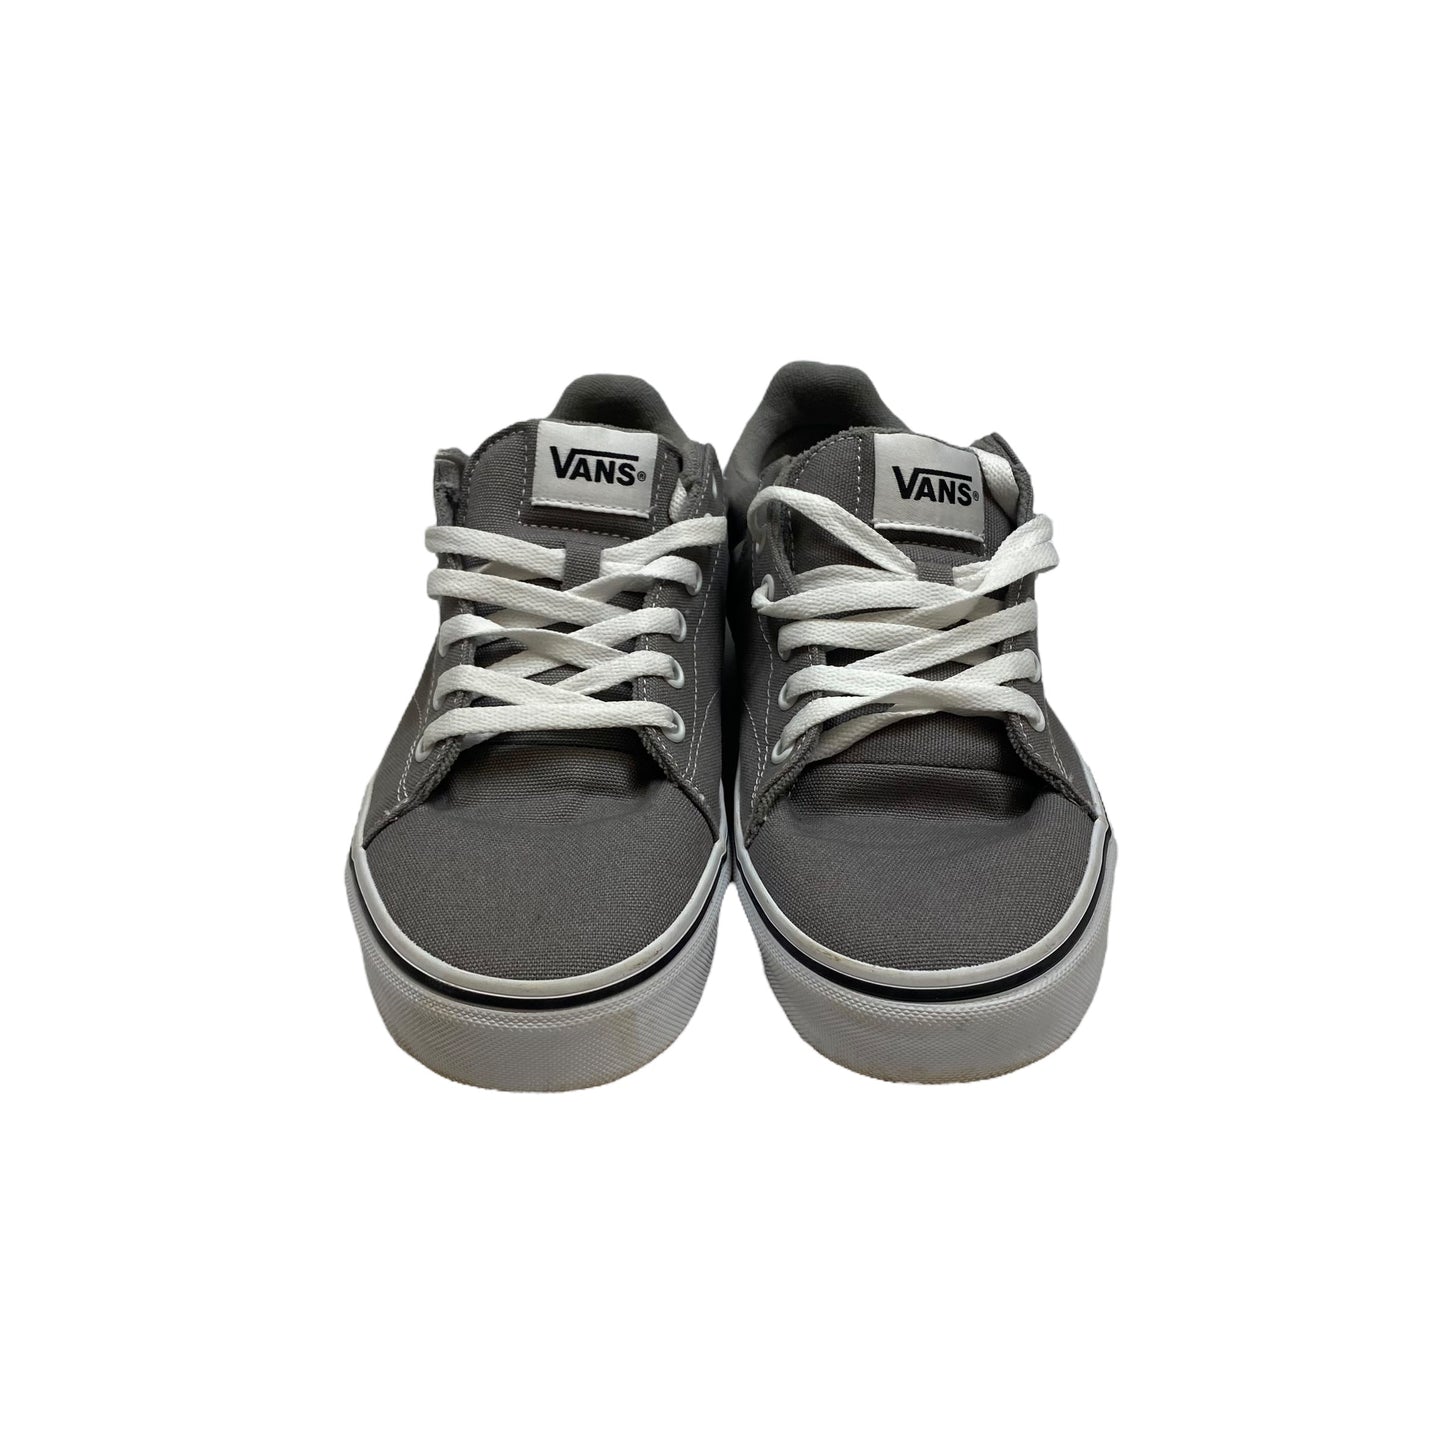 Grey Shoes Sneakers Vans, Size 10.5